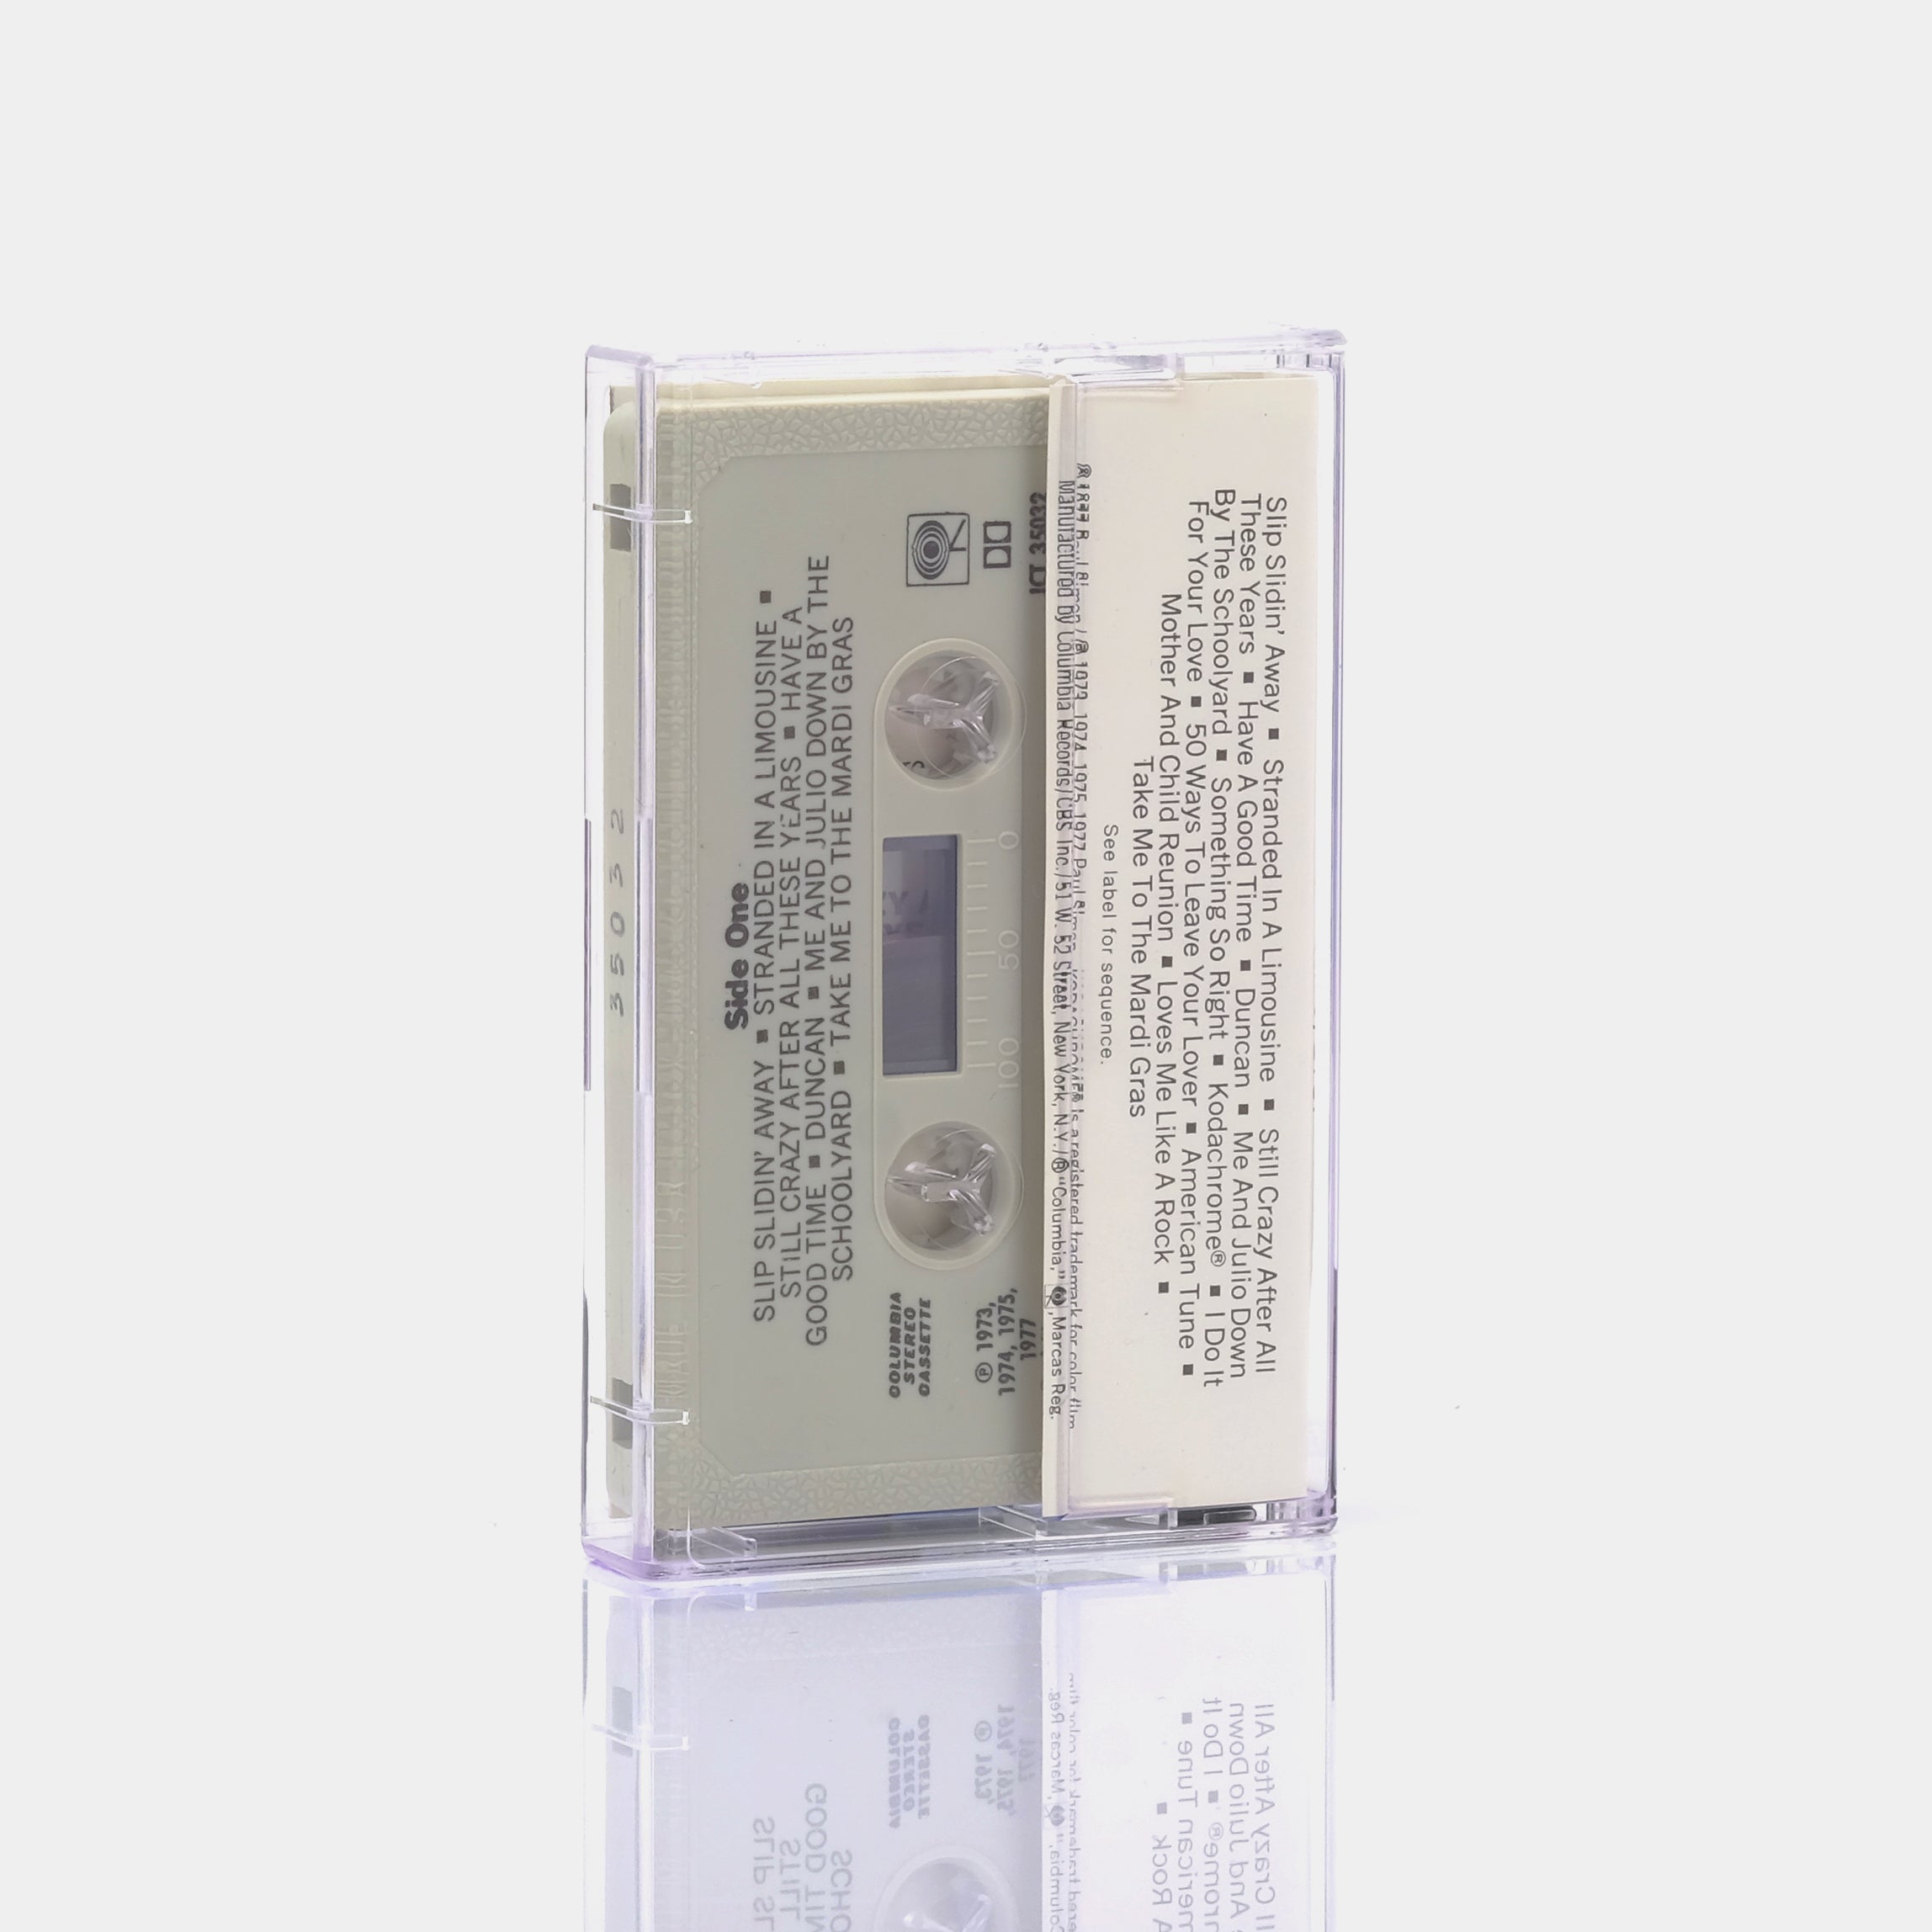 Paul Simon - Greatest Hits, Etc. Cassette Tape